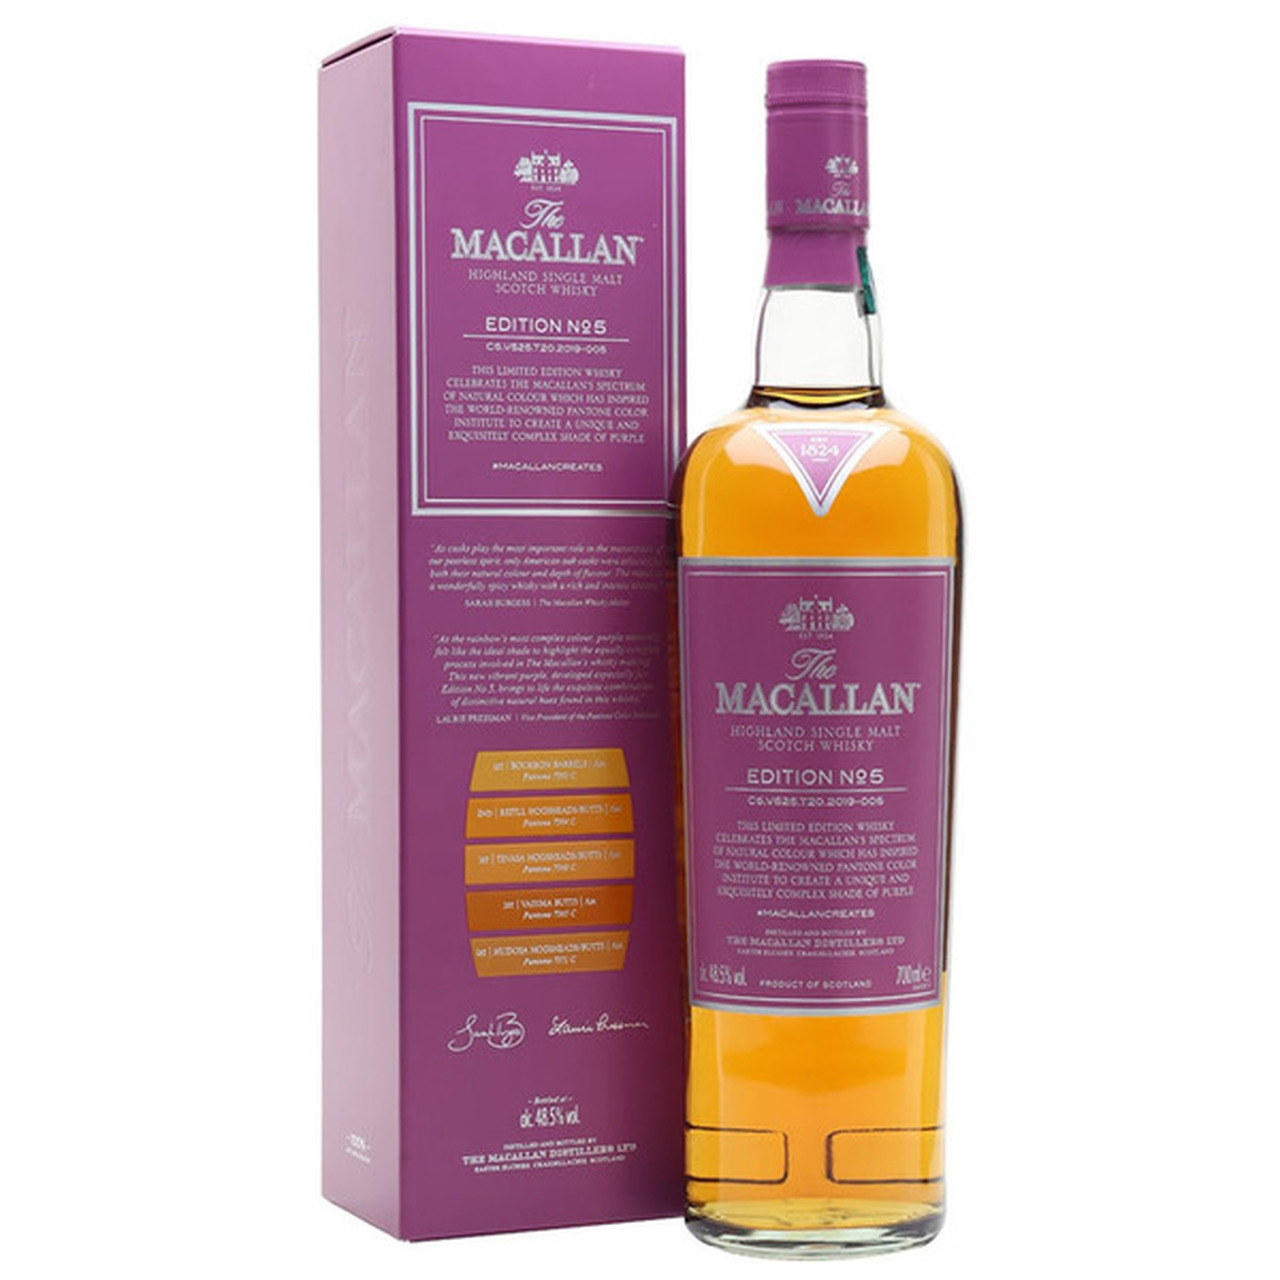 macallan edition no 5 single malt scotch